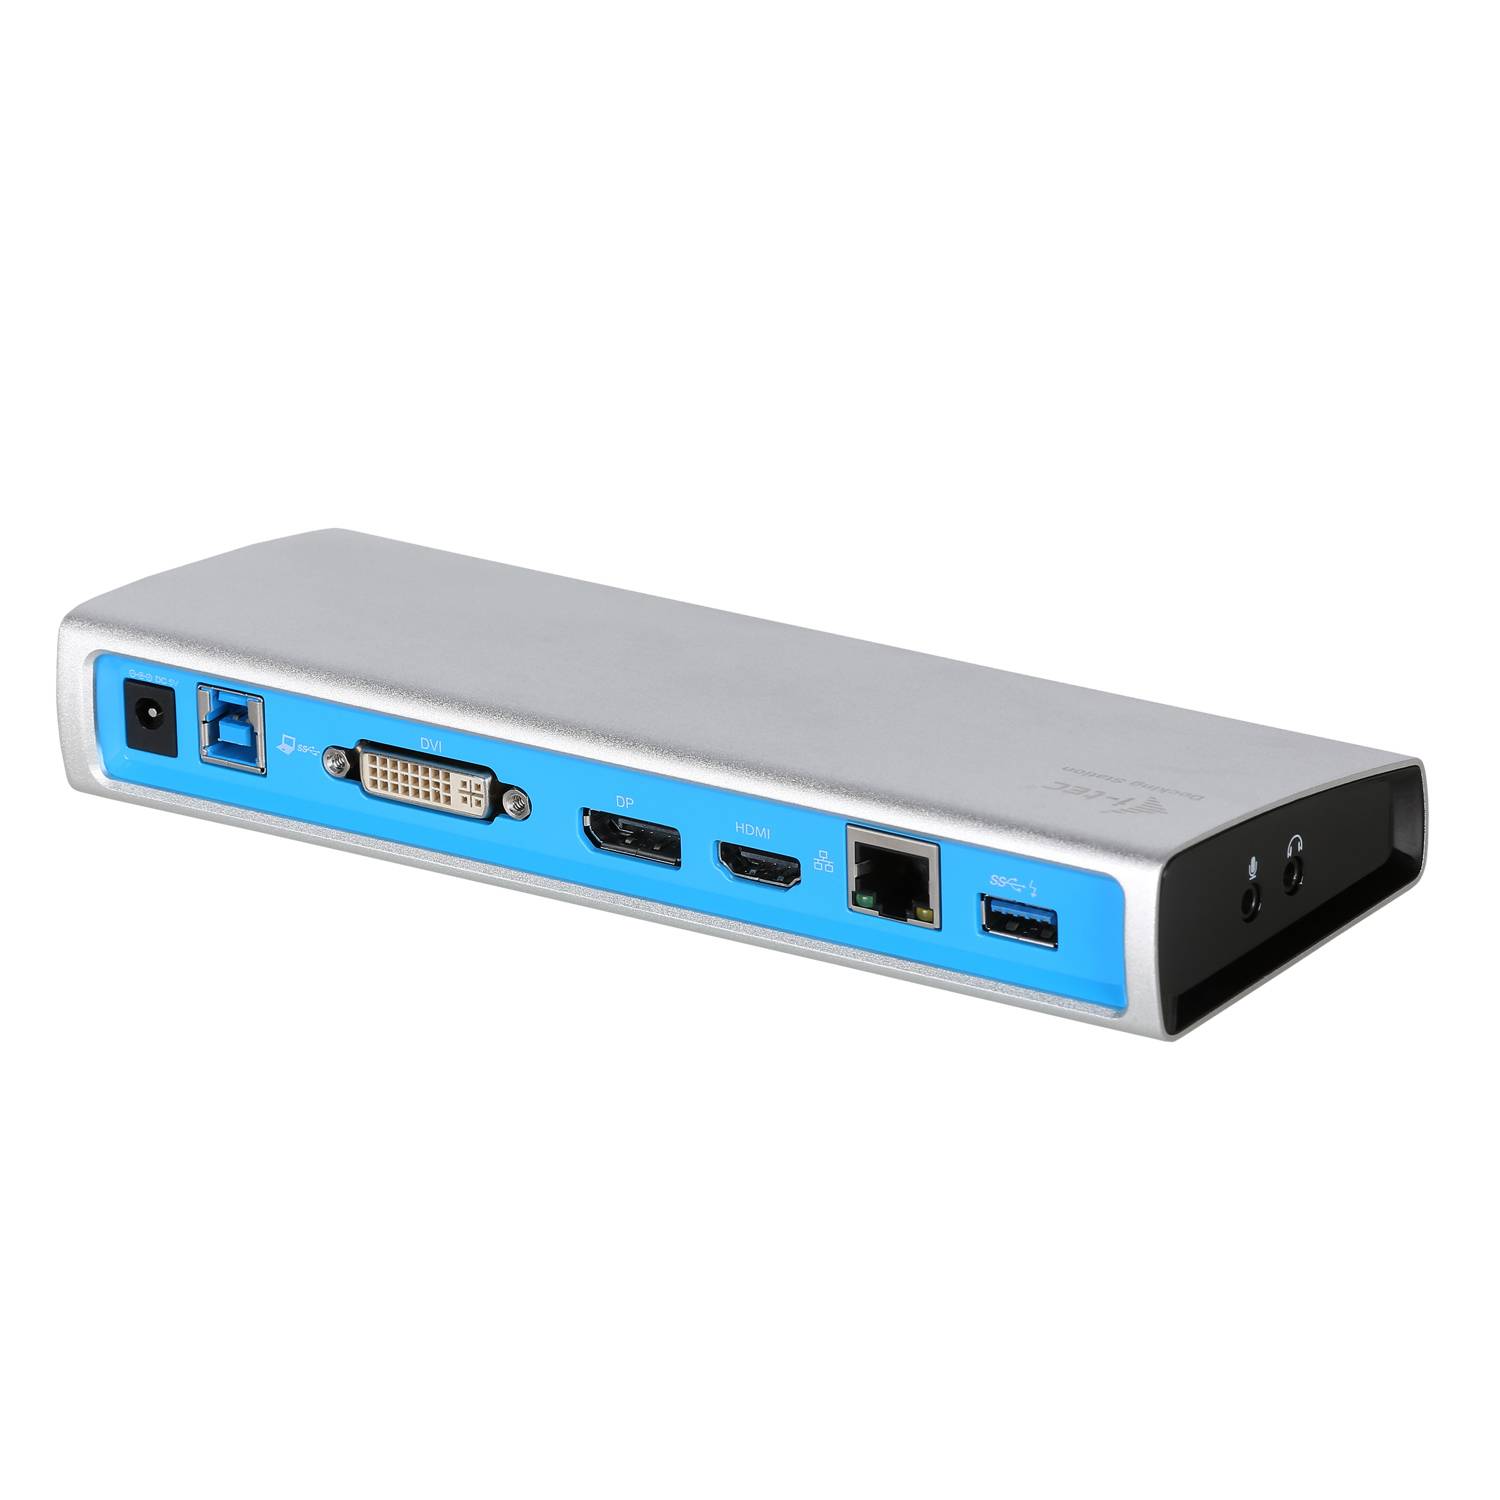 Rca Informatique - Image du produit : I-TEC METAL DOCKING STATION USB 3.0 1XDVI-I 1X HDMI OR DP